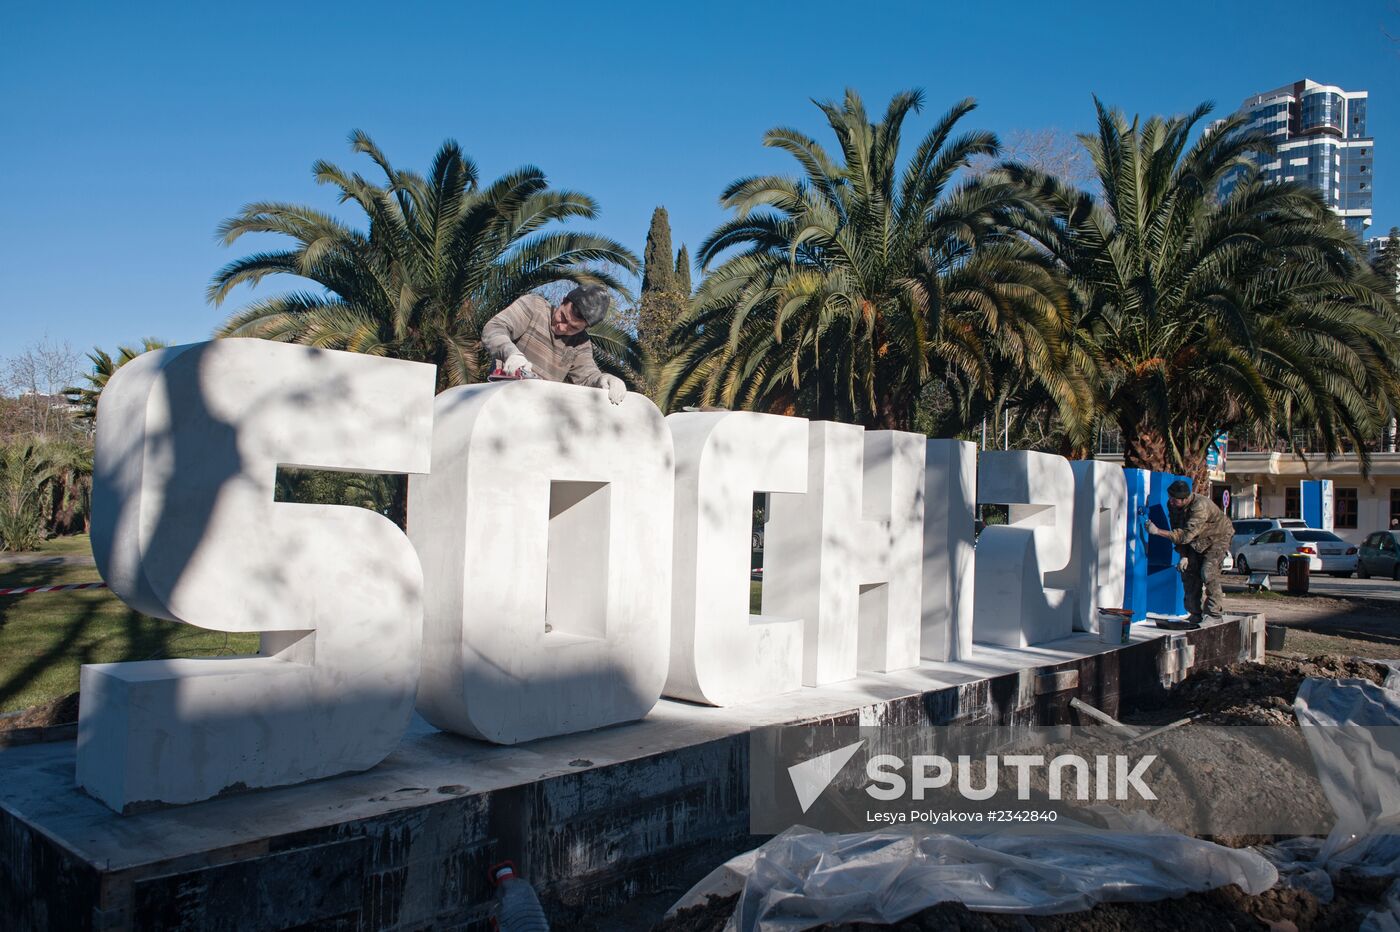 Sochi 2014 sign in Sochi